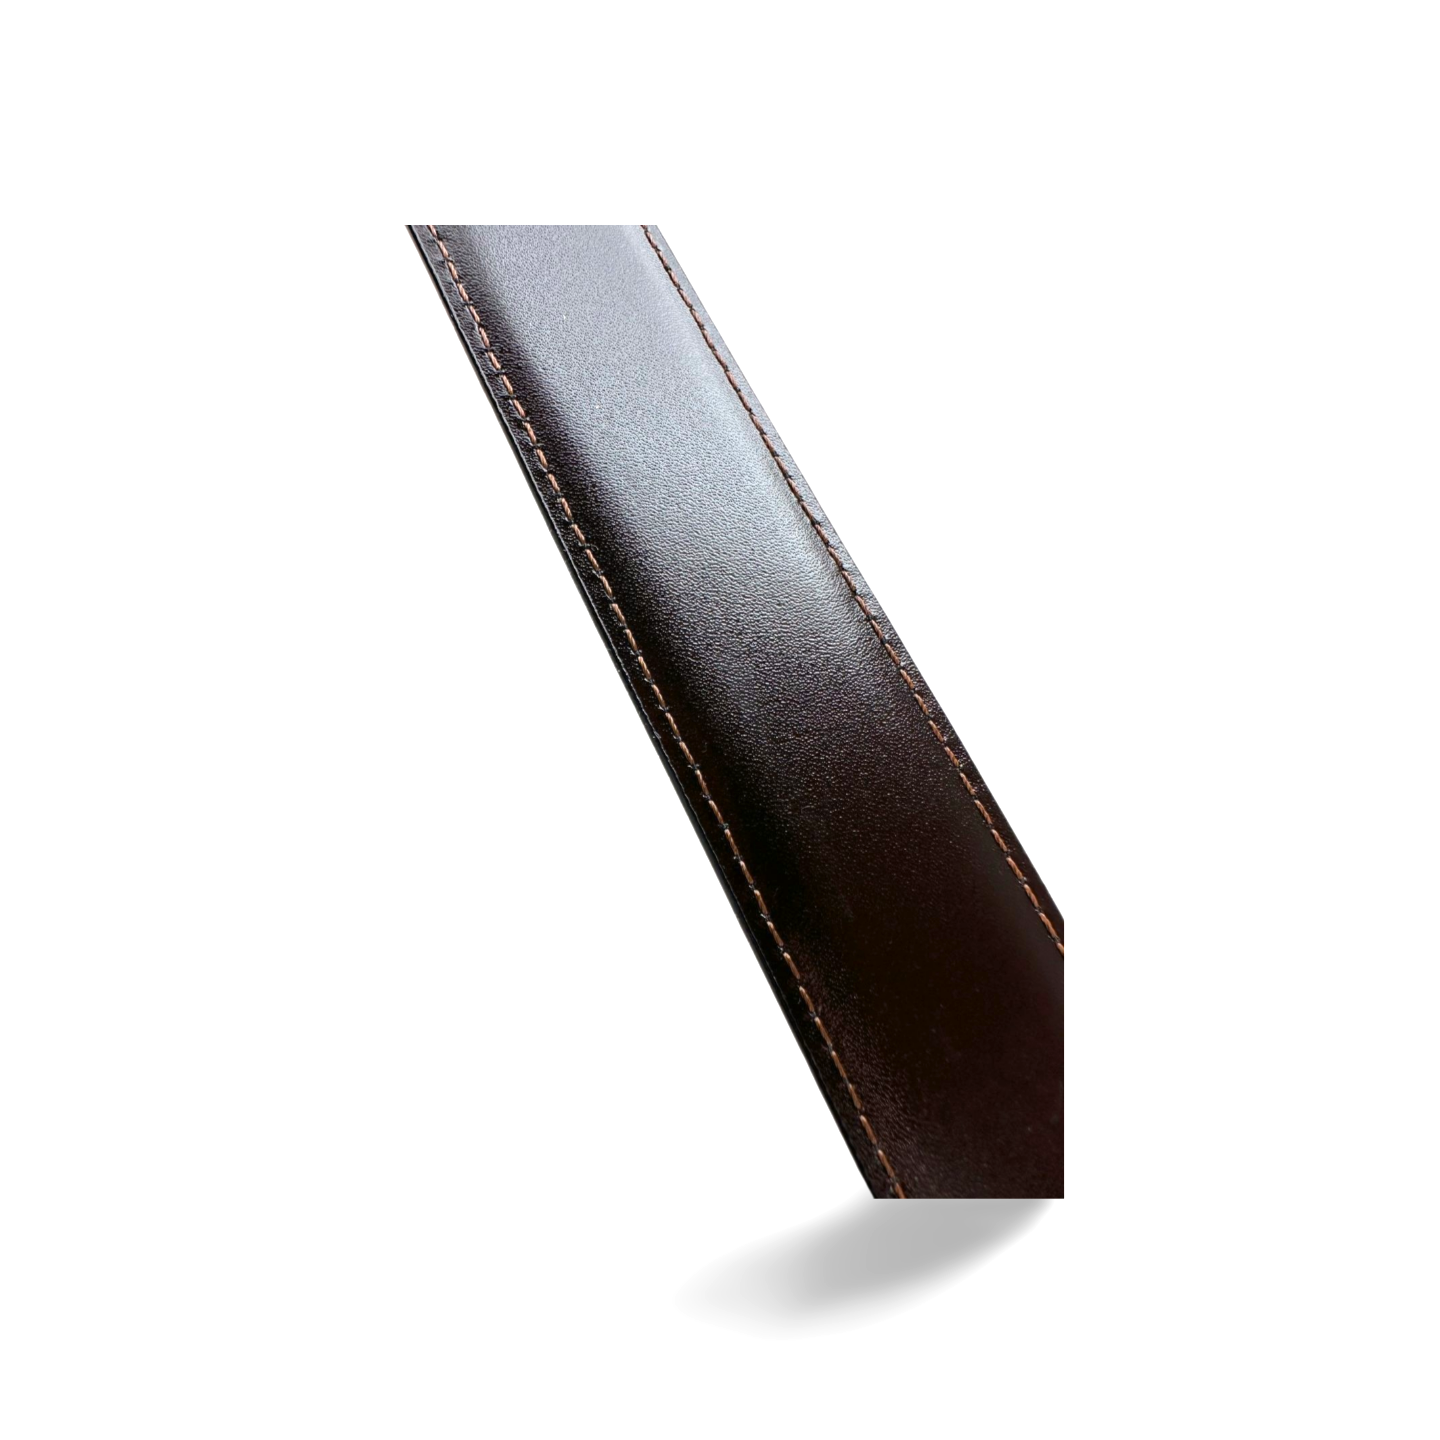 SONDERPREIS: Montblanc® Gürtel aus wendbarem Leder schwarz/braun*